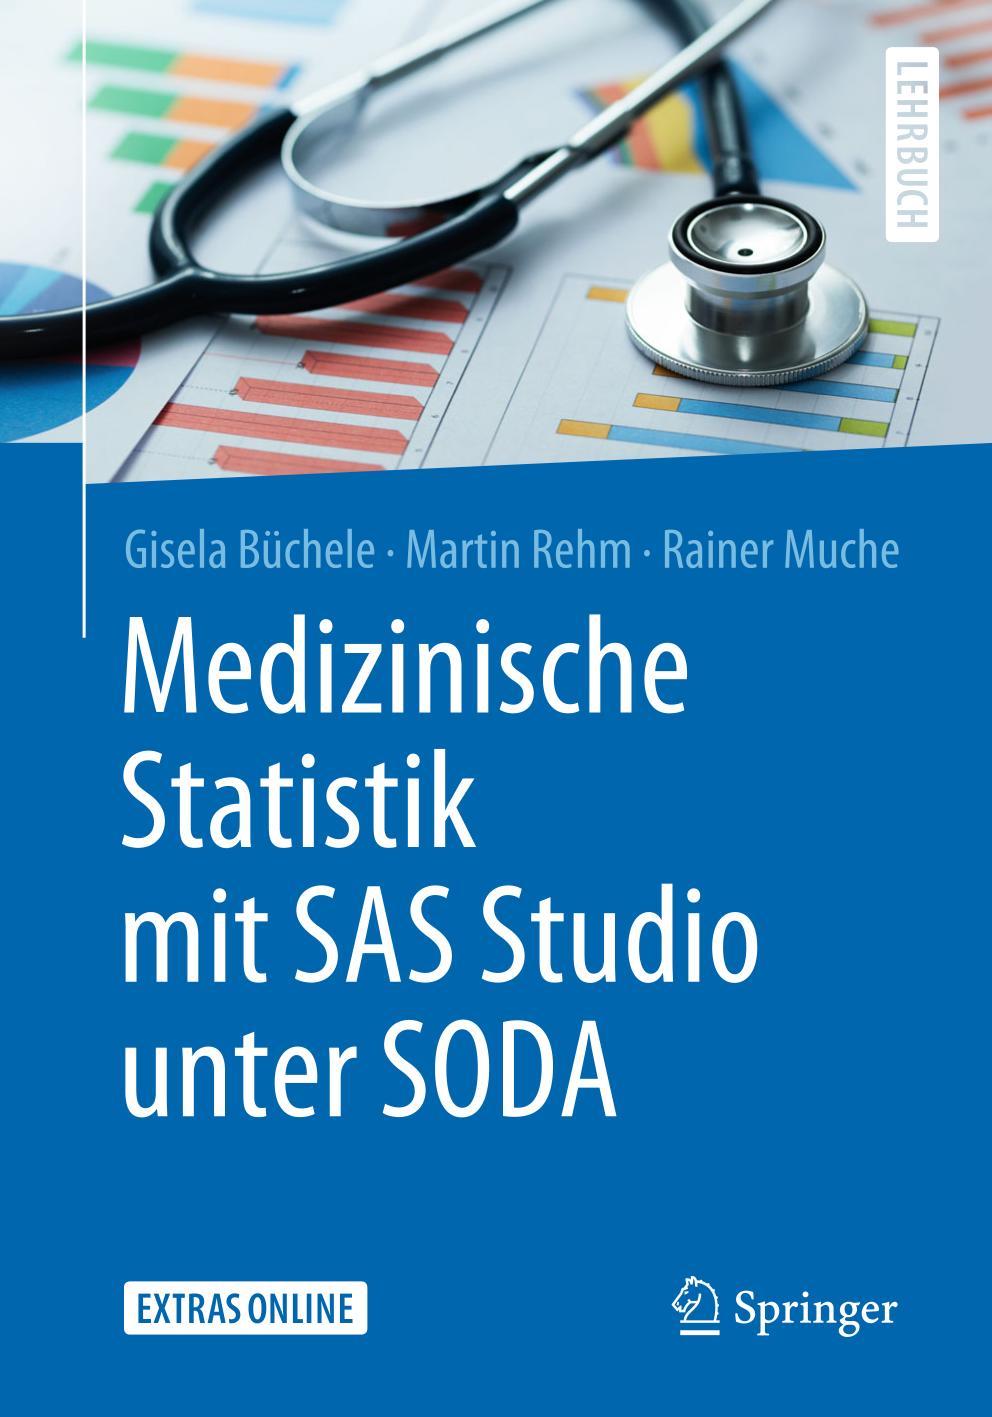 Medizinische Statistik mit SAS Studio unter SODA